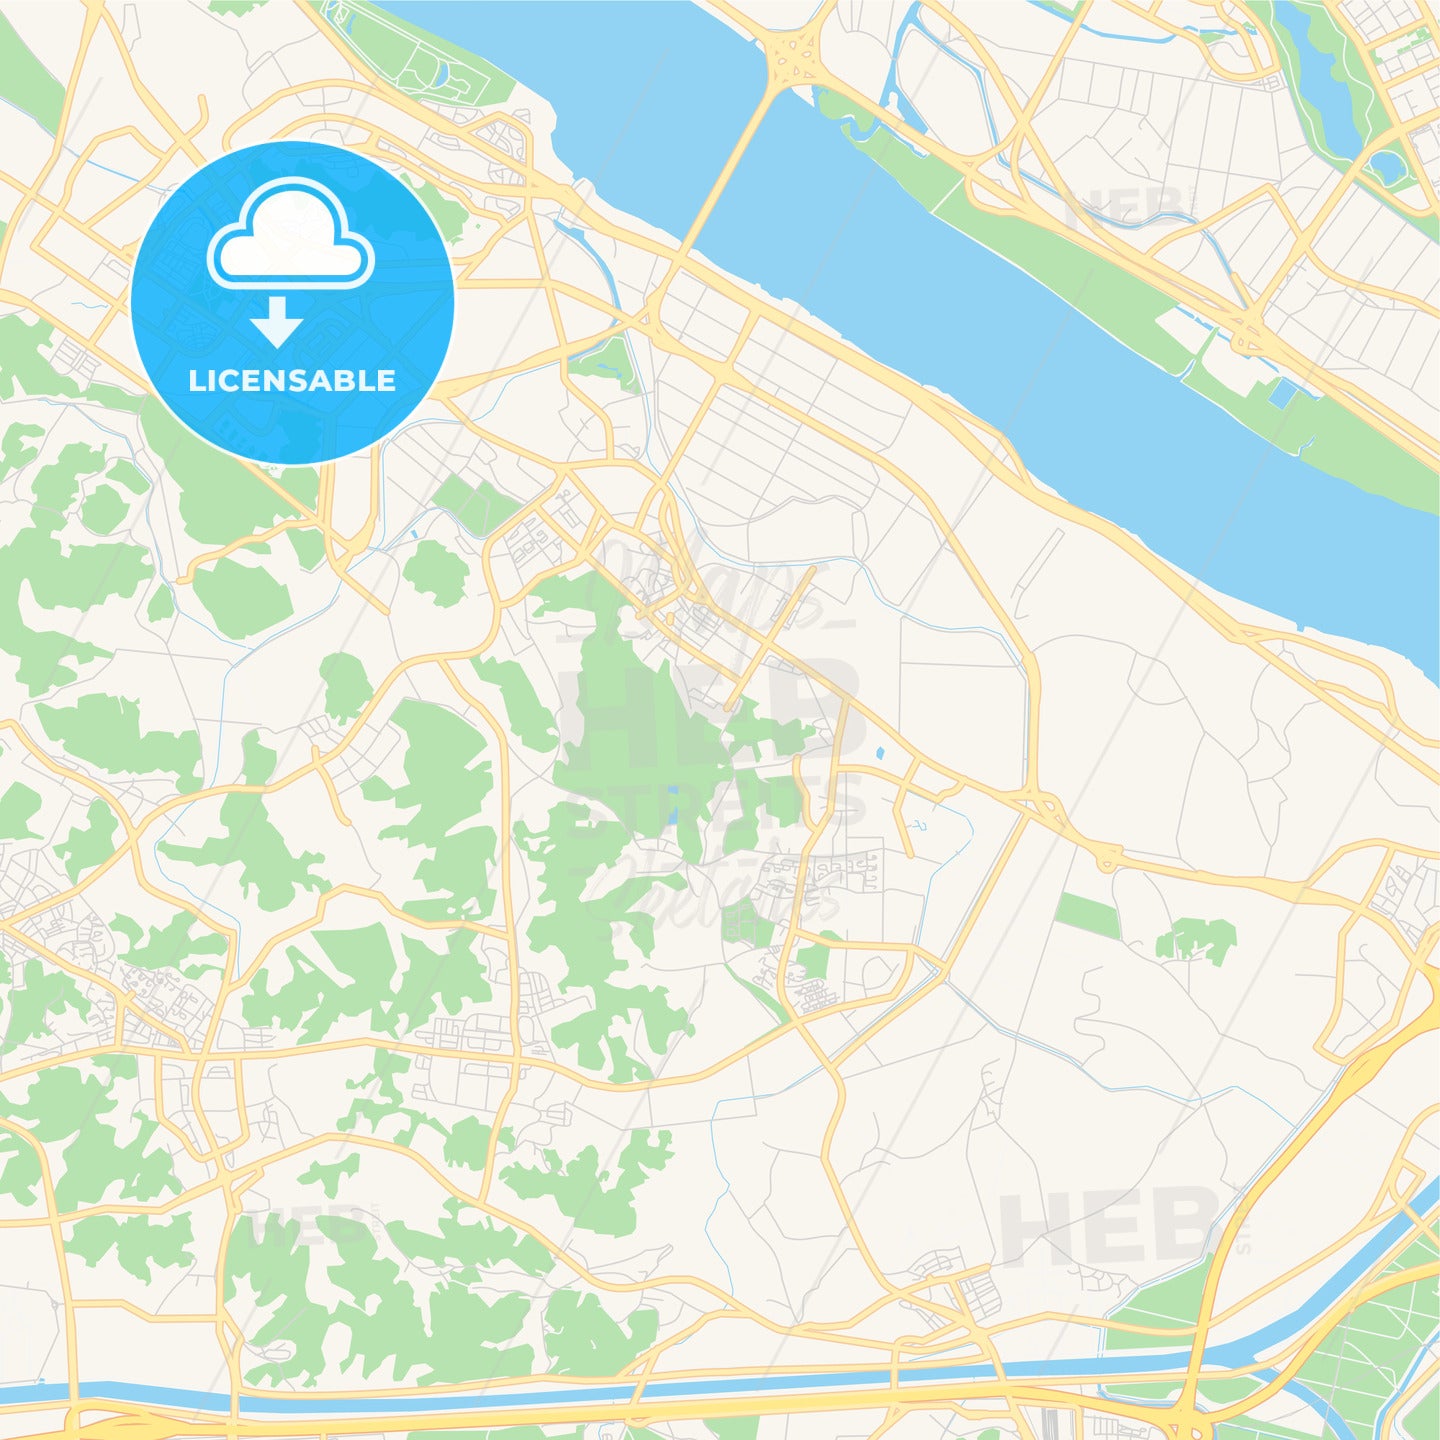 Printable street map of Gimpo, South Korea